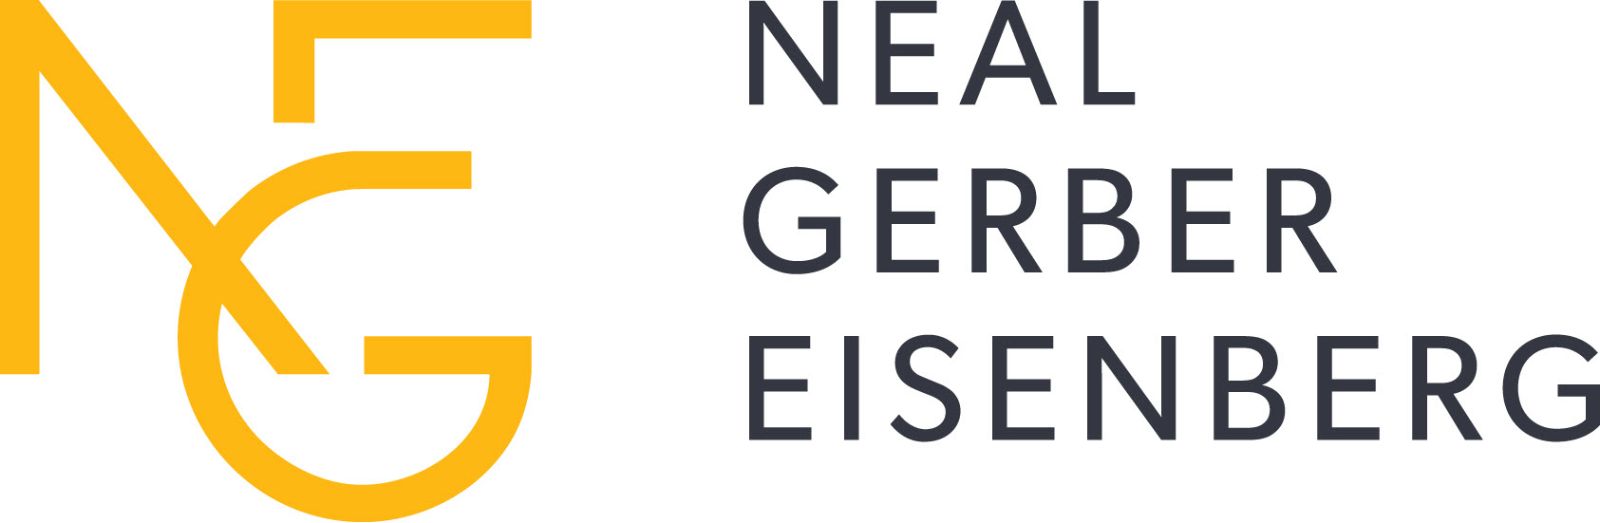 Neal Gerber Eisenberg logo